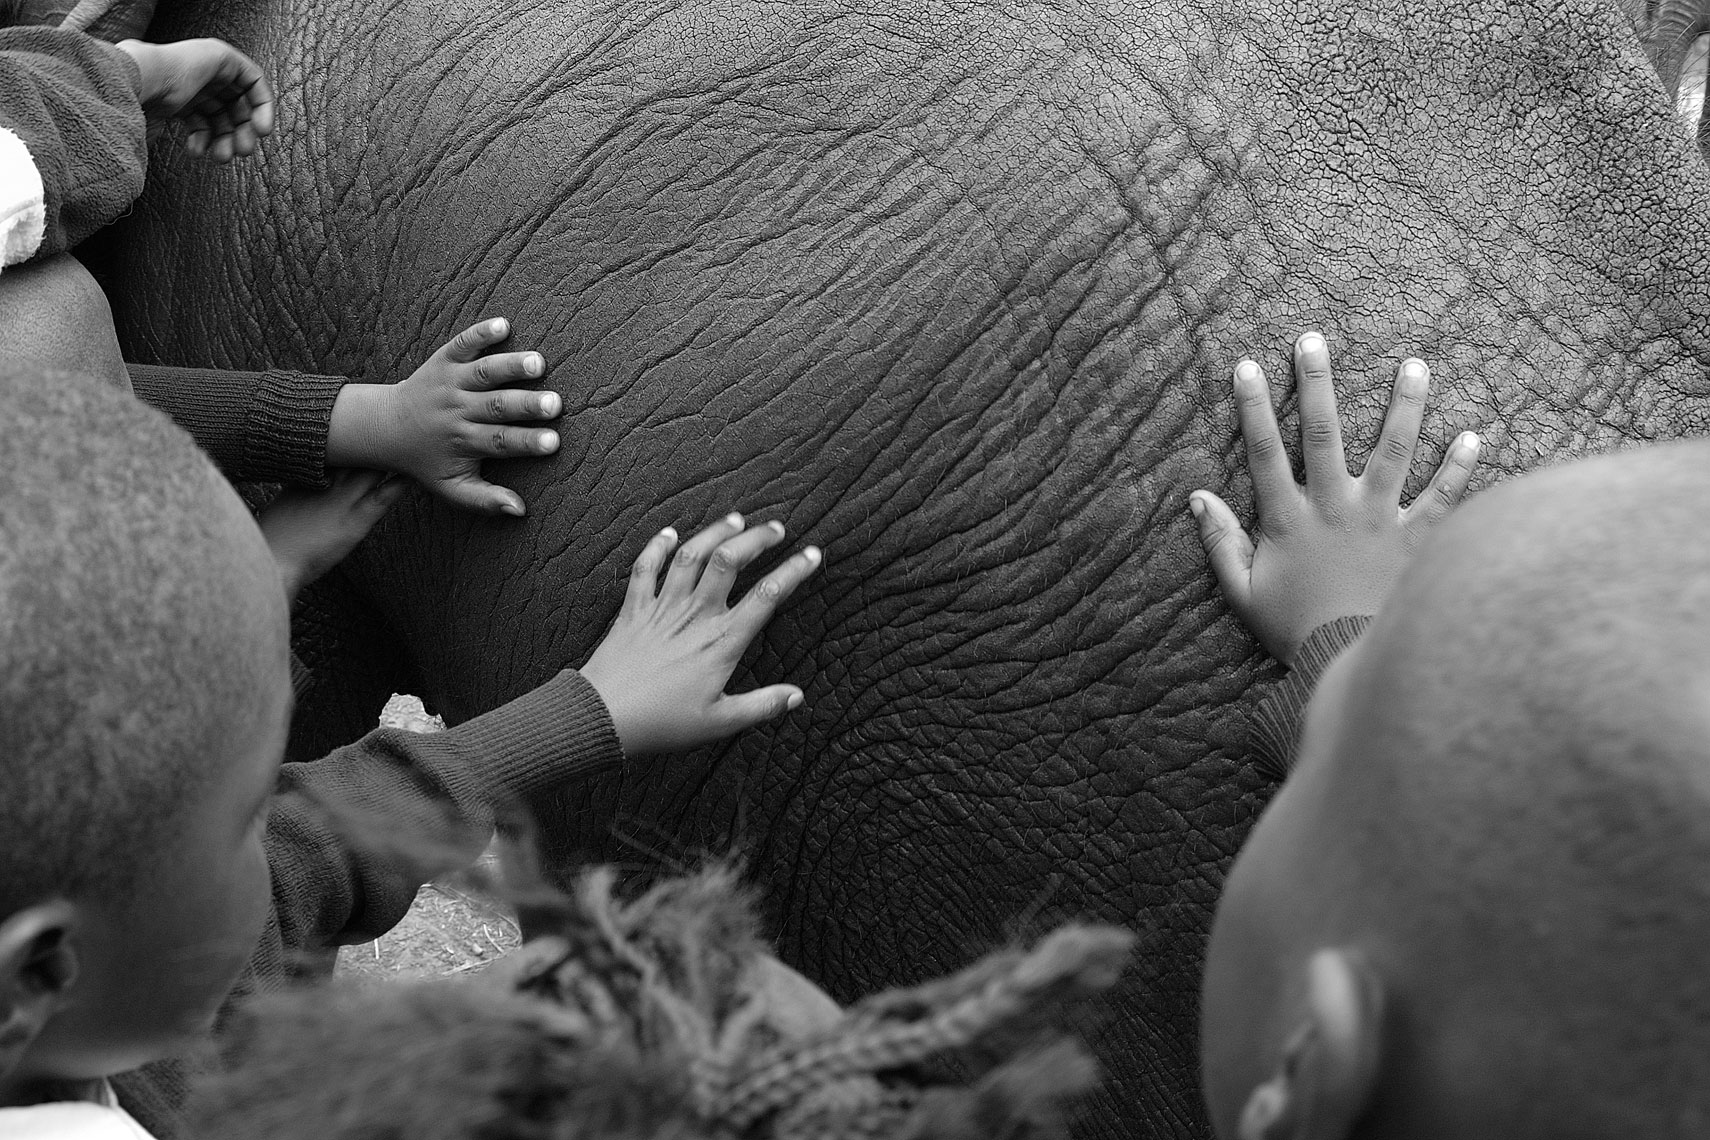  Kids touching an elephant Nairobe, Kenya 2006    3:2  